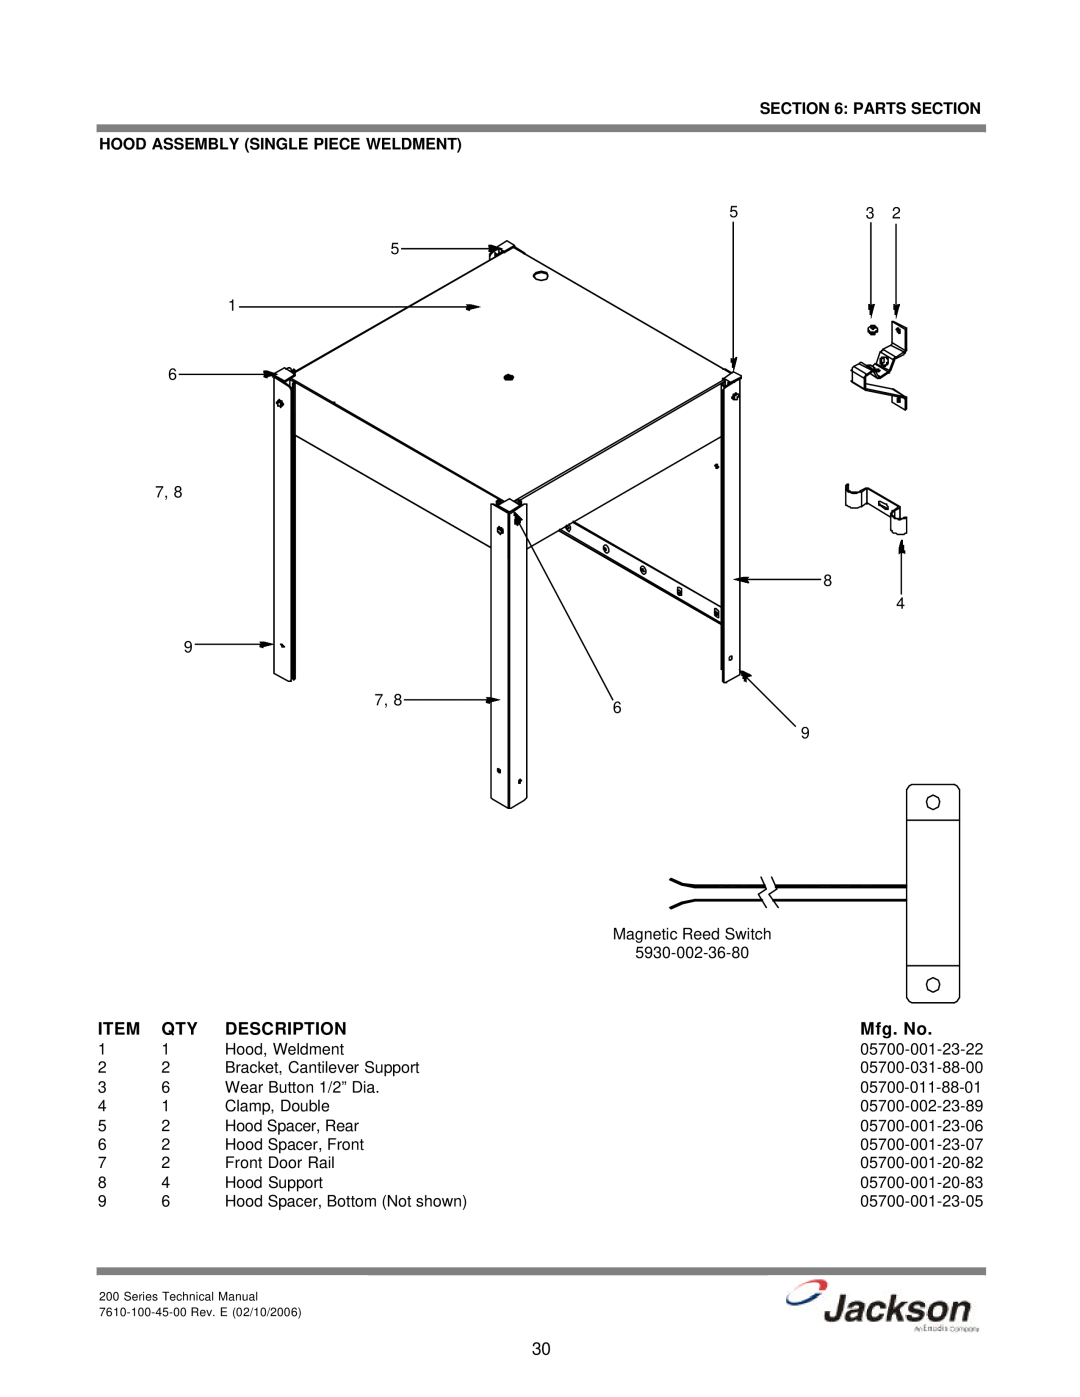 Jackson 200B, 200S, 200LT technical manual Parts Section Hood Assembly Single Piece Weldment, Description, Mfg. No 